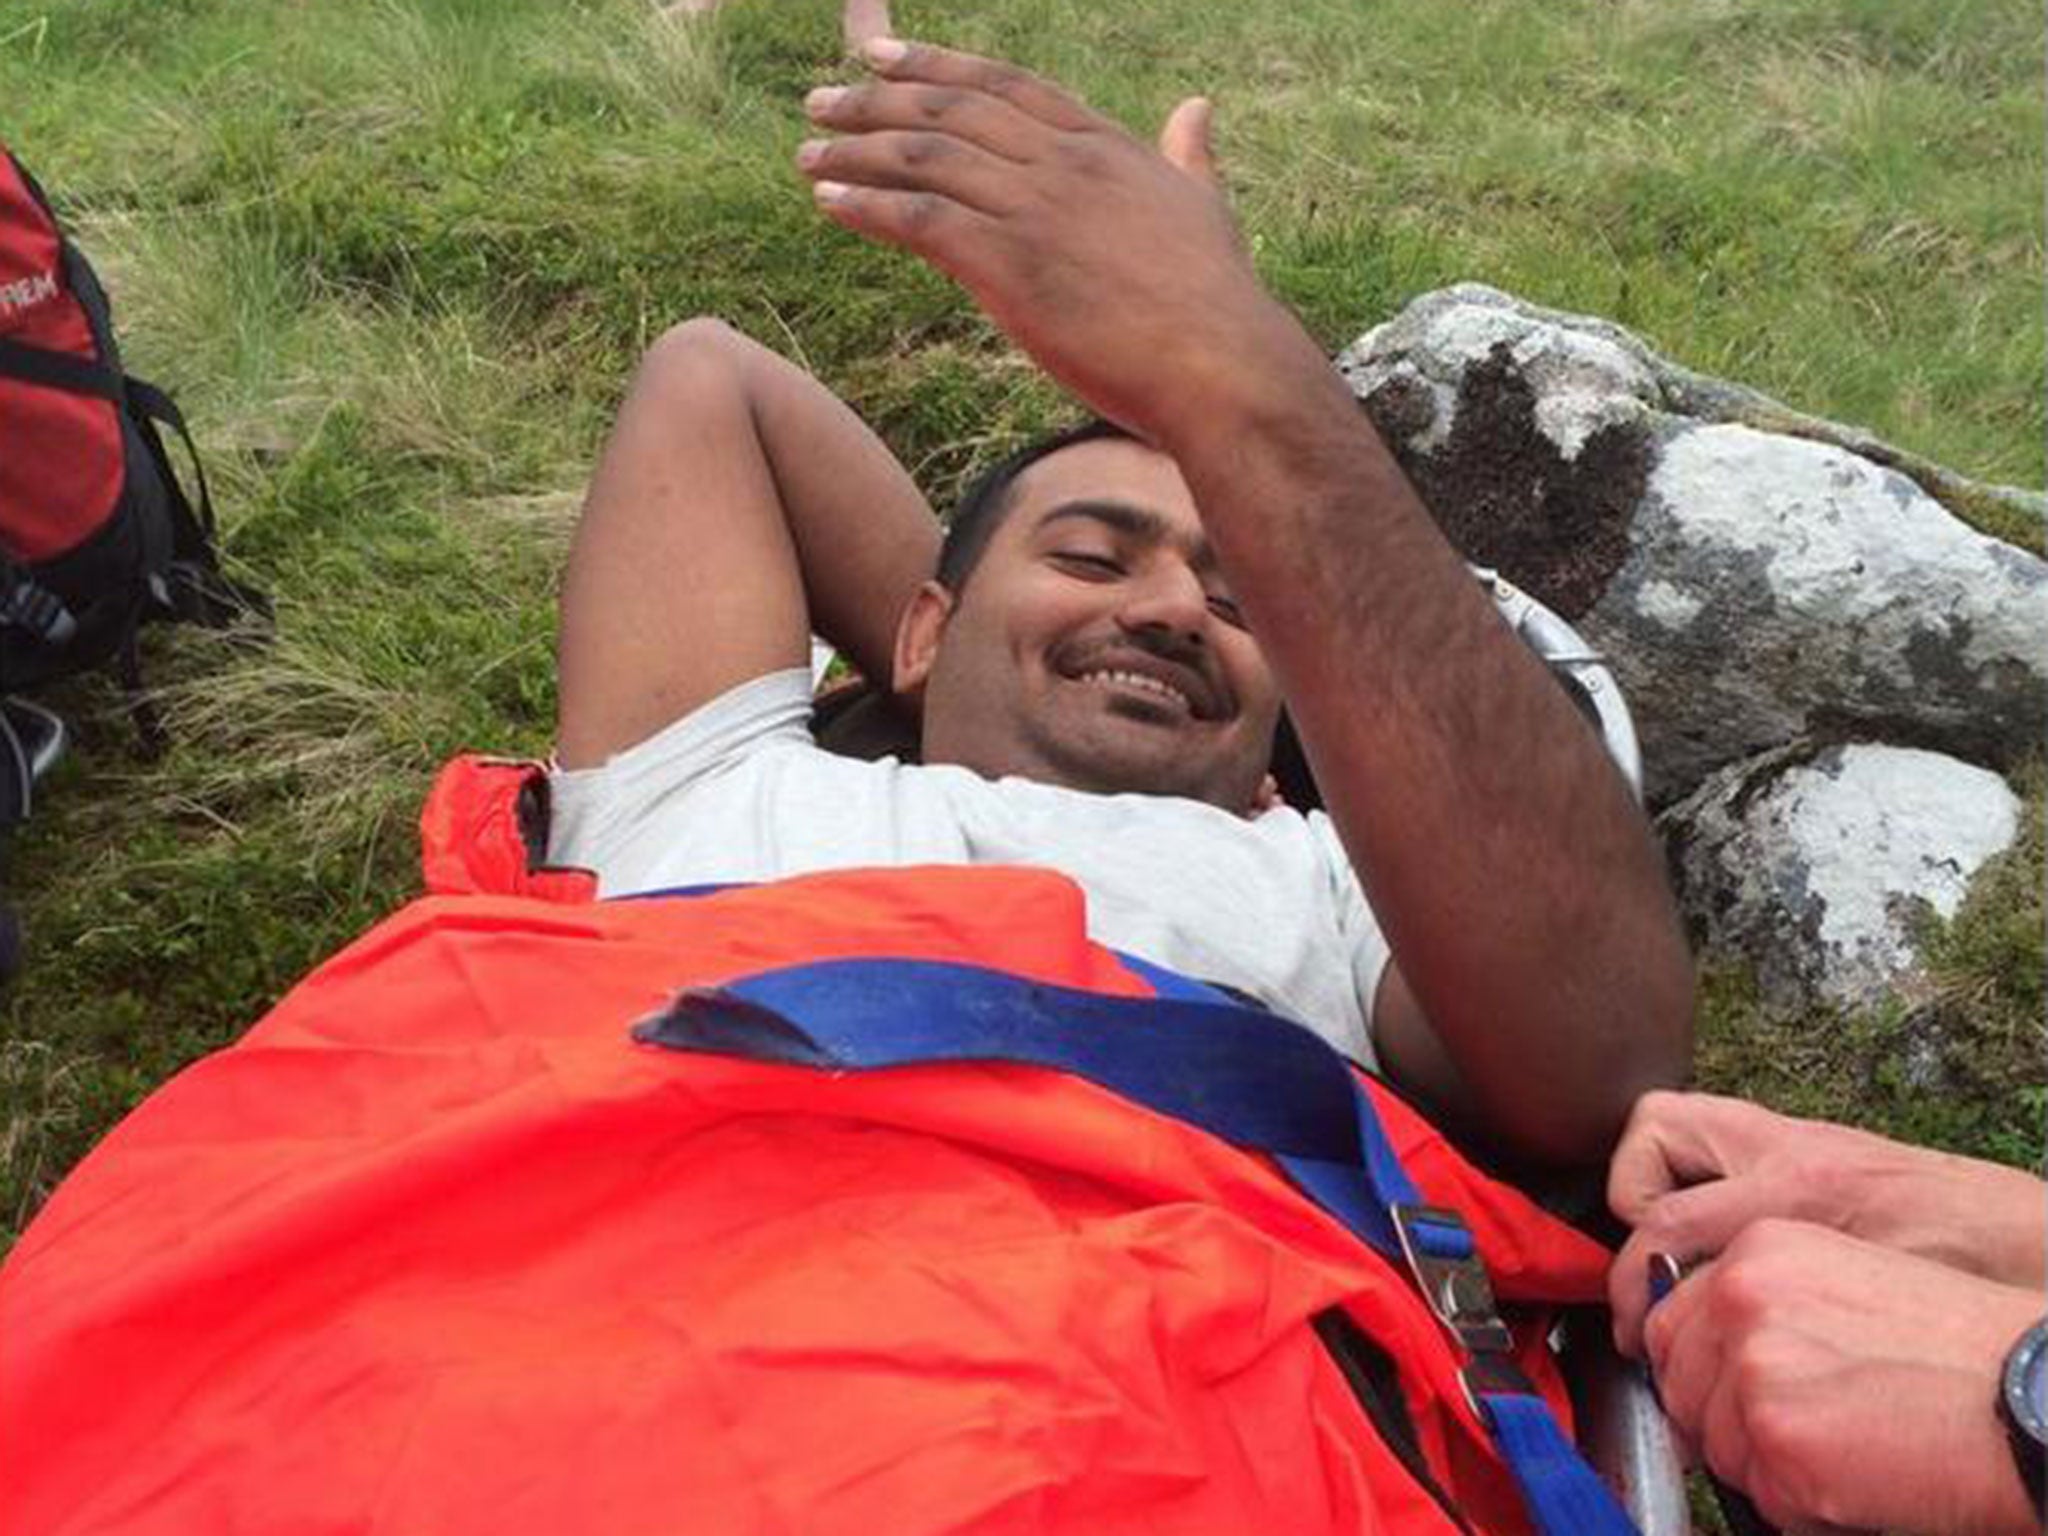 The Lochaber Mountain Rescue Team took the injured man off the mountain.